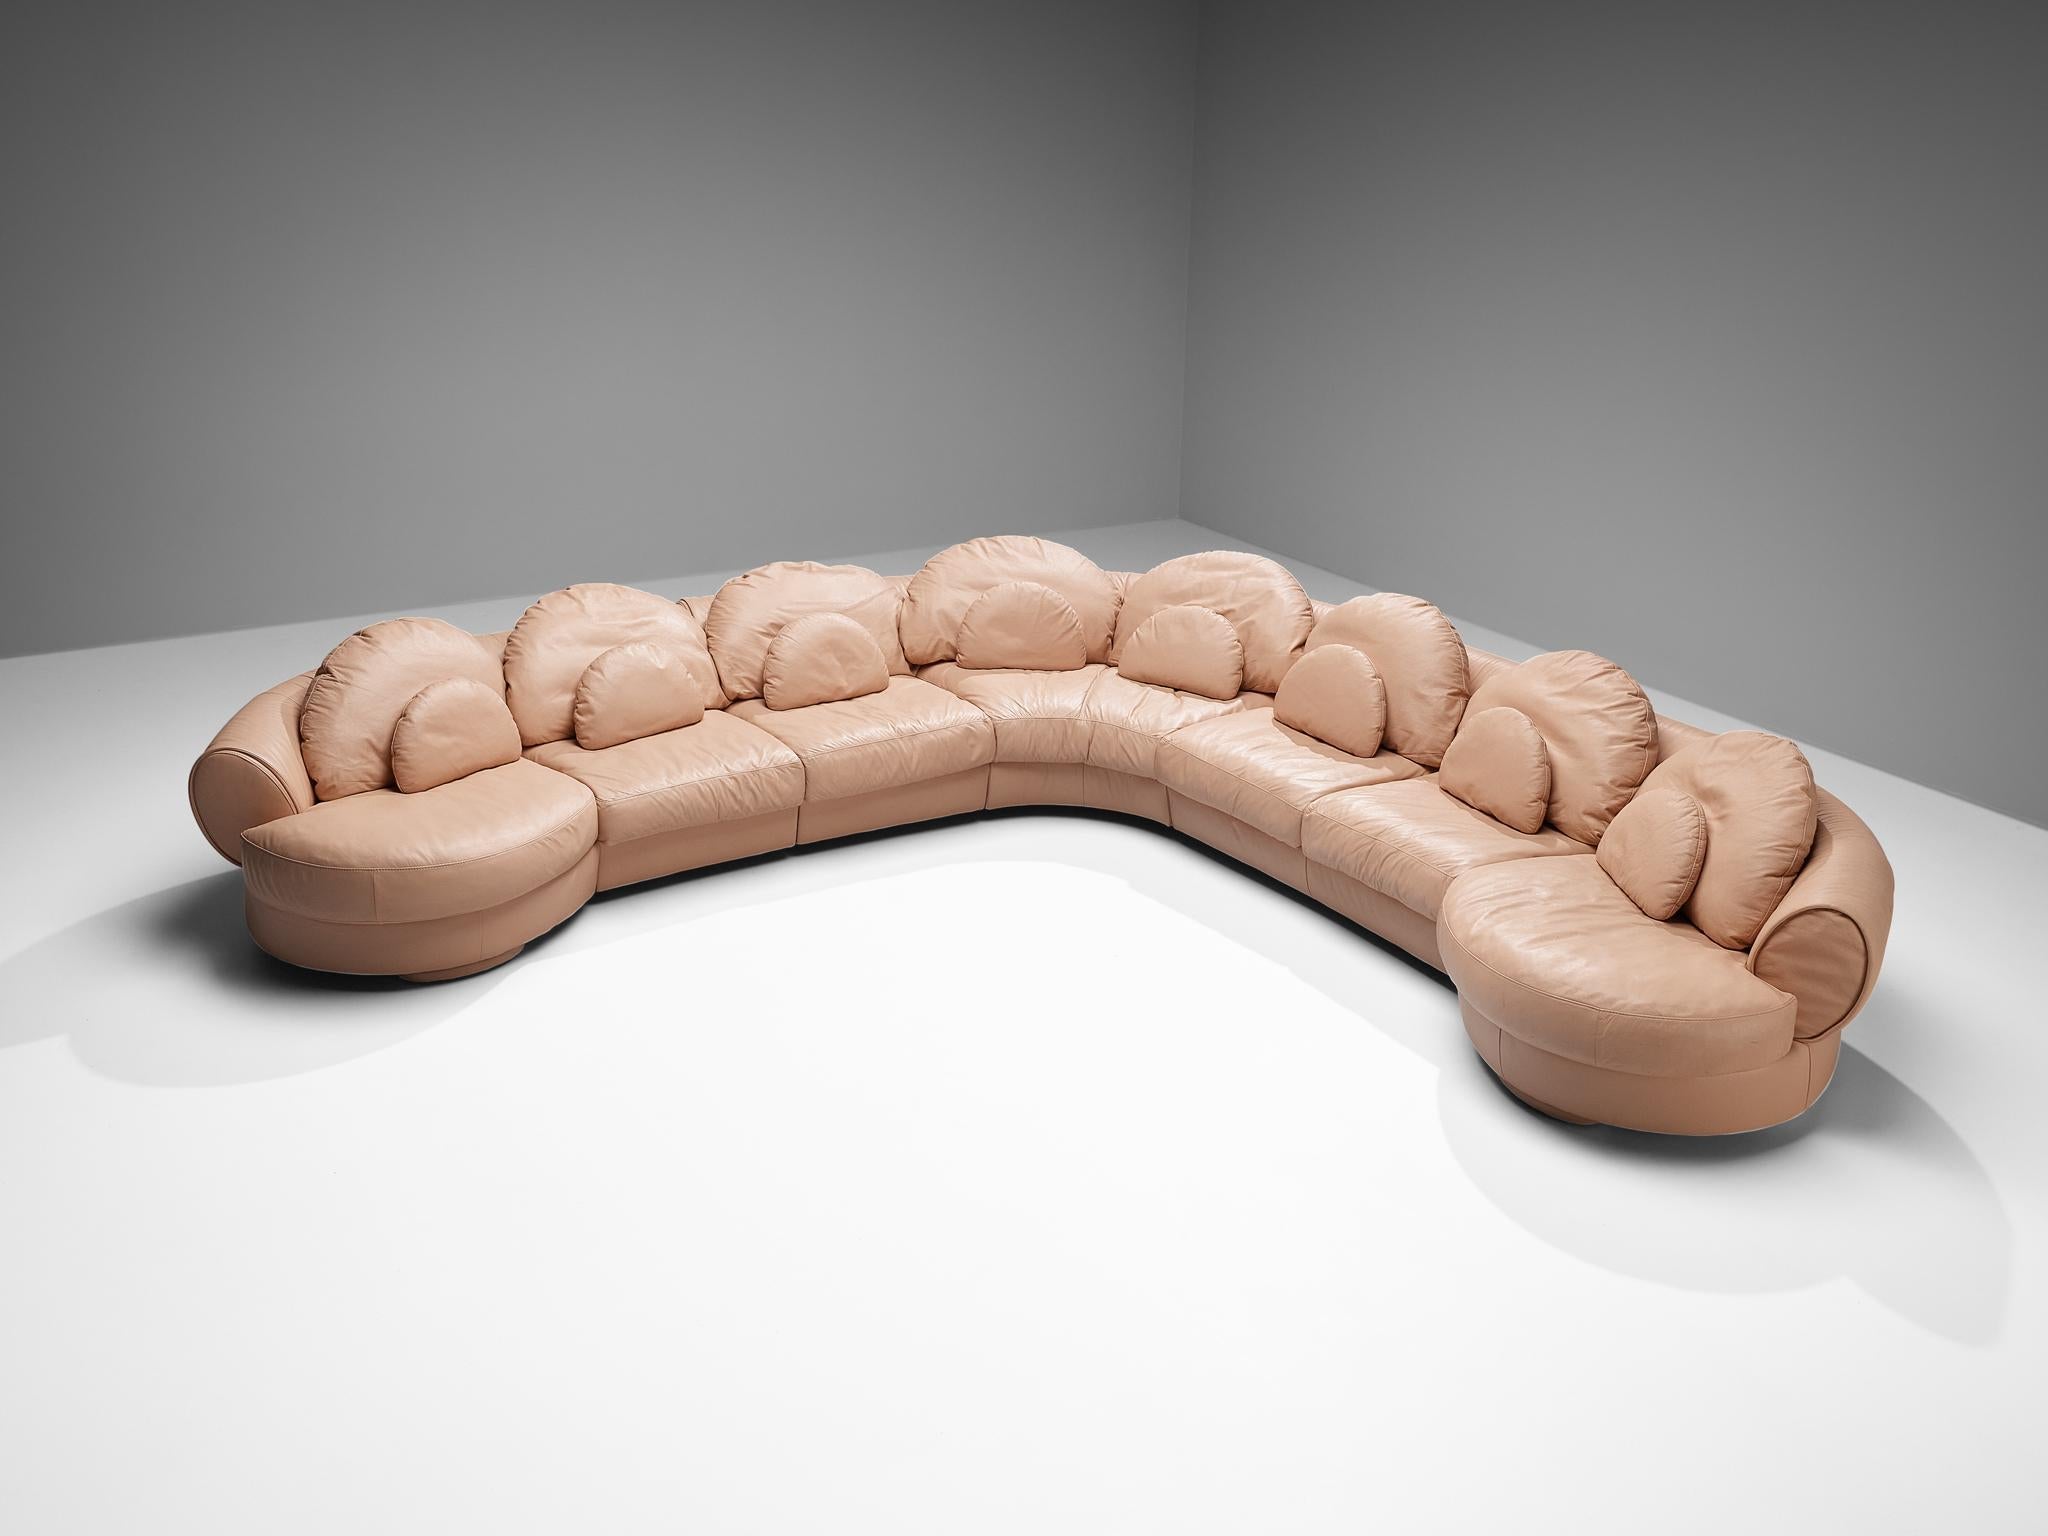 Wiener Werkstätte 'Attributed' Sectional Sofa in Pink Orange Leather